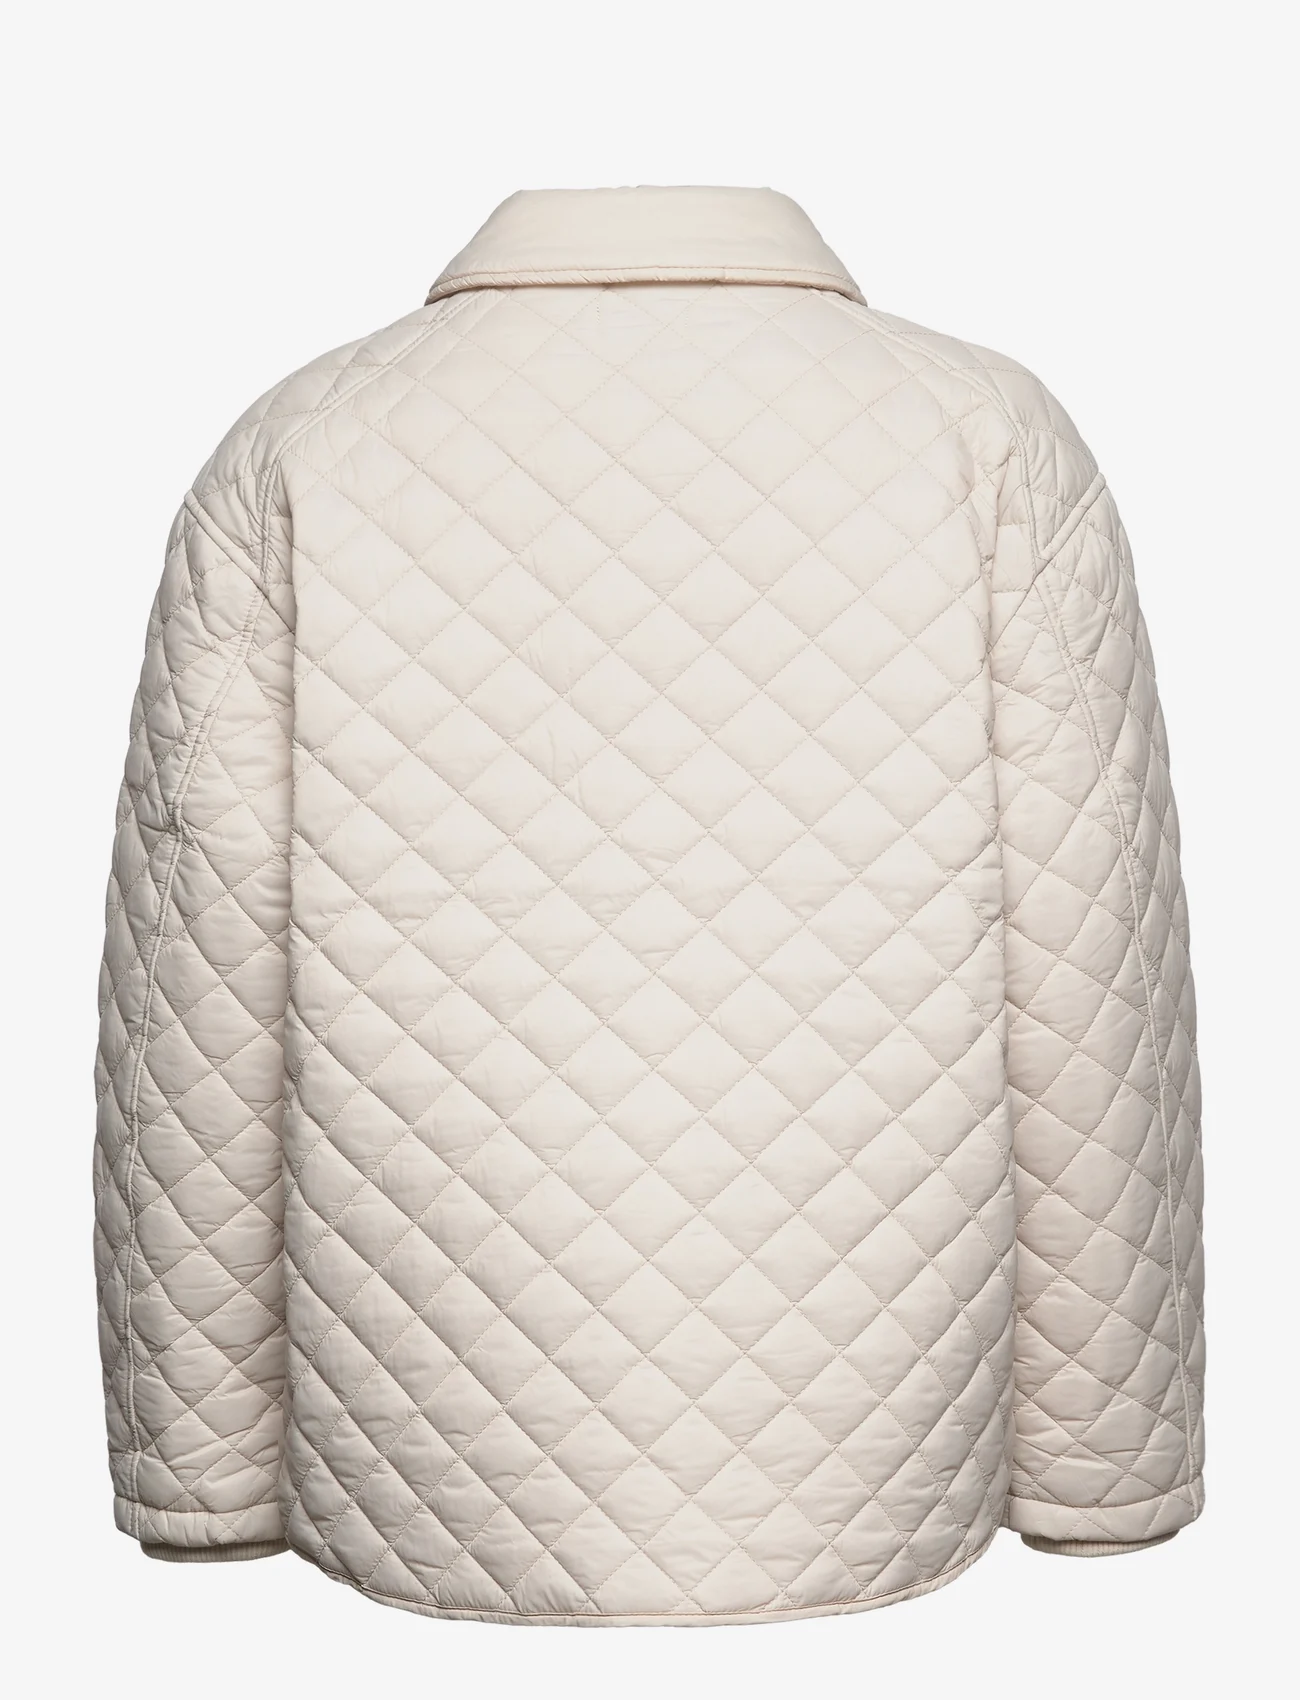 Esprit Collection - Jackets outdoor woven - wiosenne kurtki - ice - 1